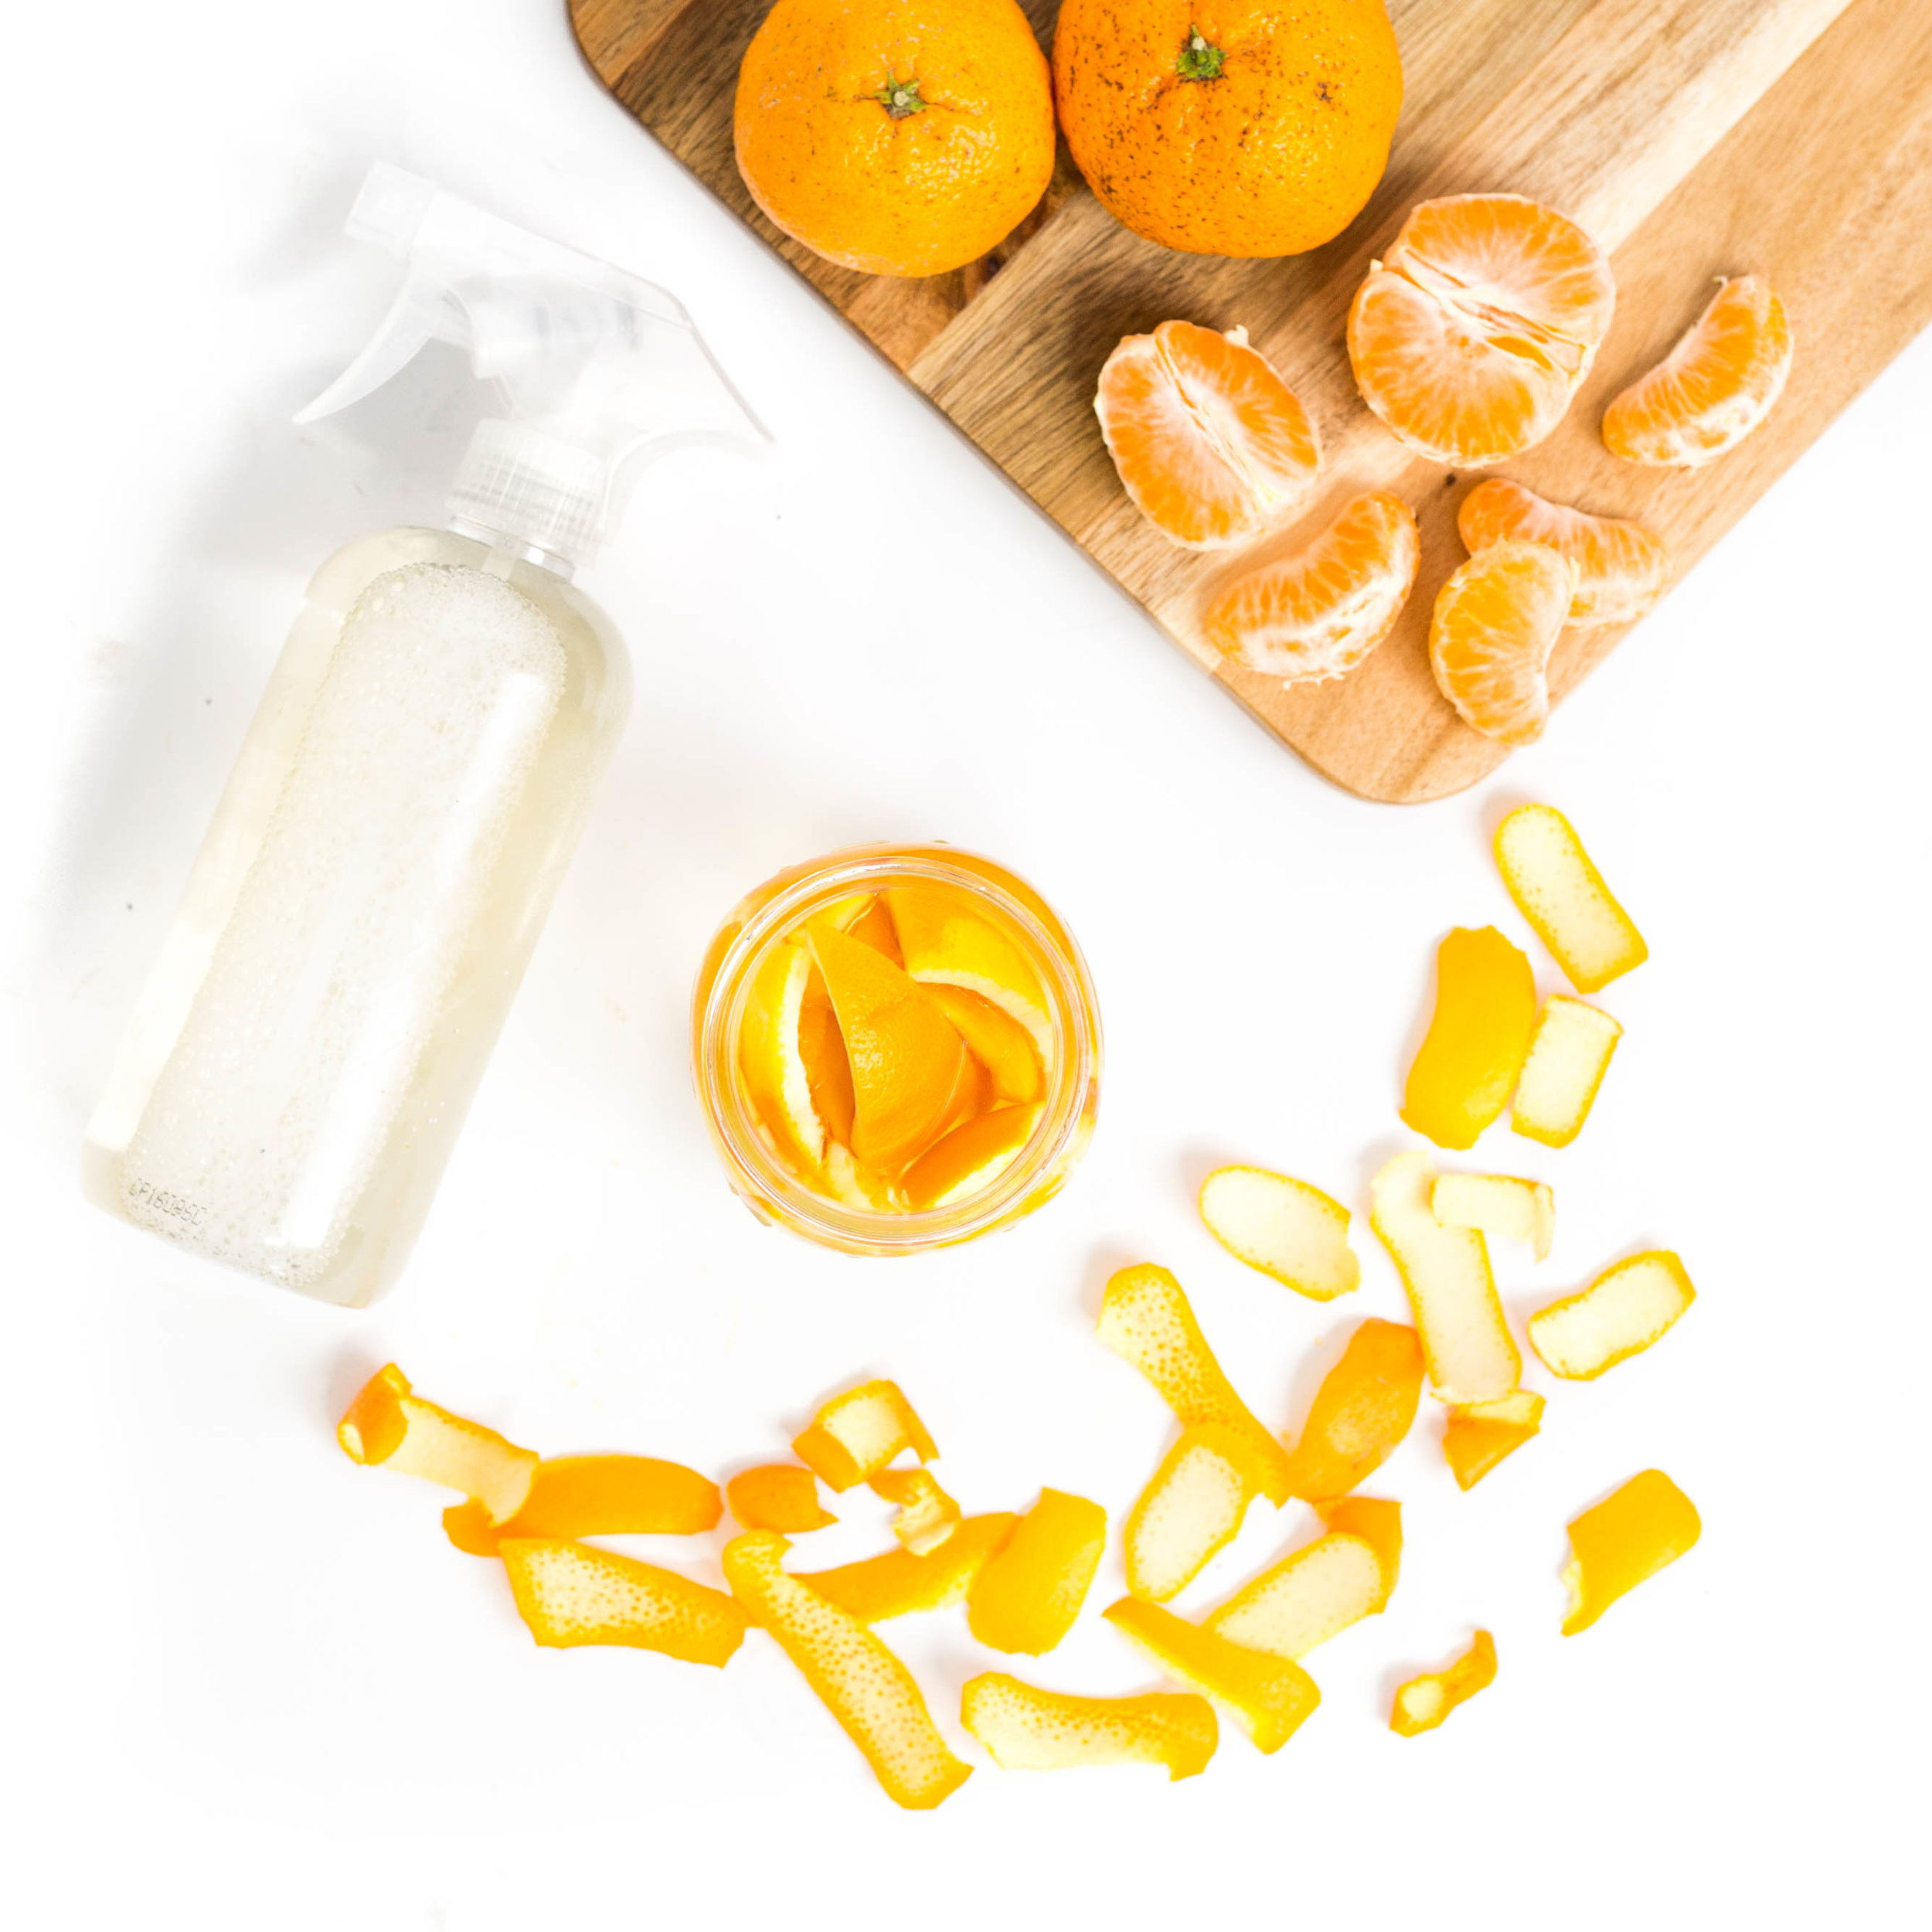 Non toxic Kitchen Cleaner with orange peels